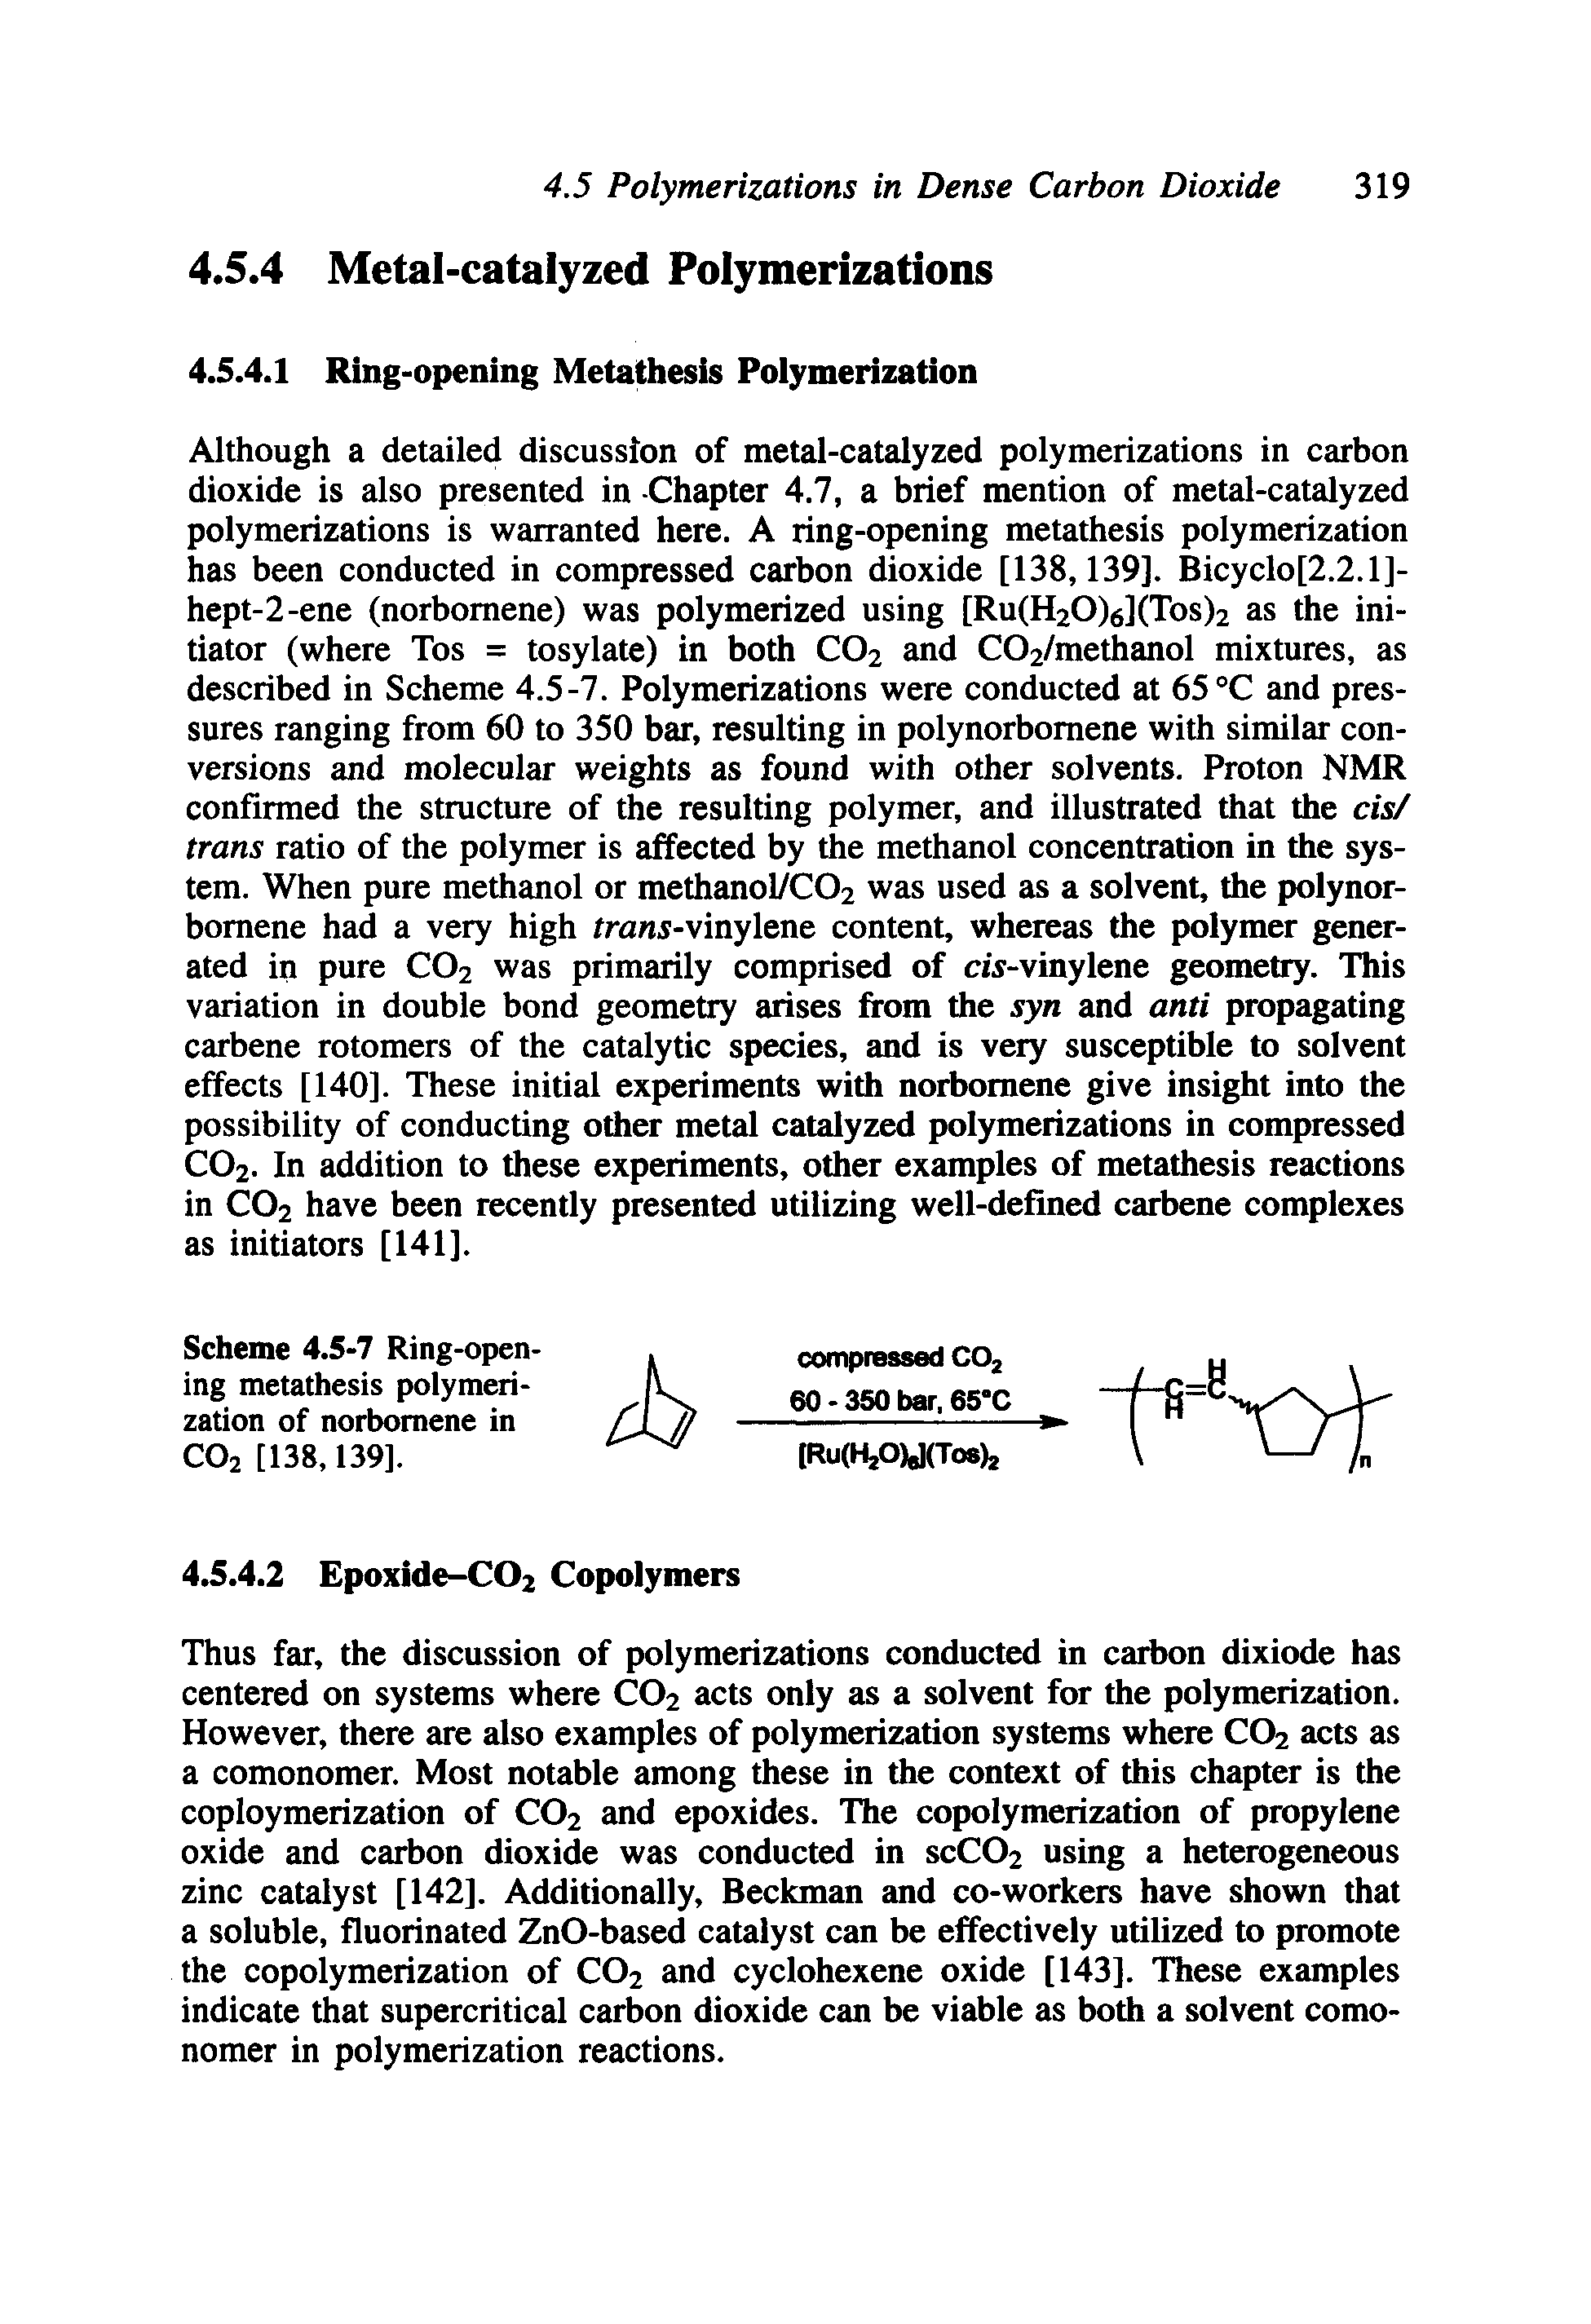 Scheme 4.5-7 Ring-opening metathesis polymerization of norbomene in CO2 [138,139],...